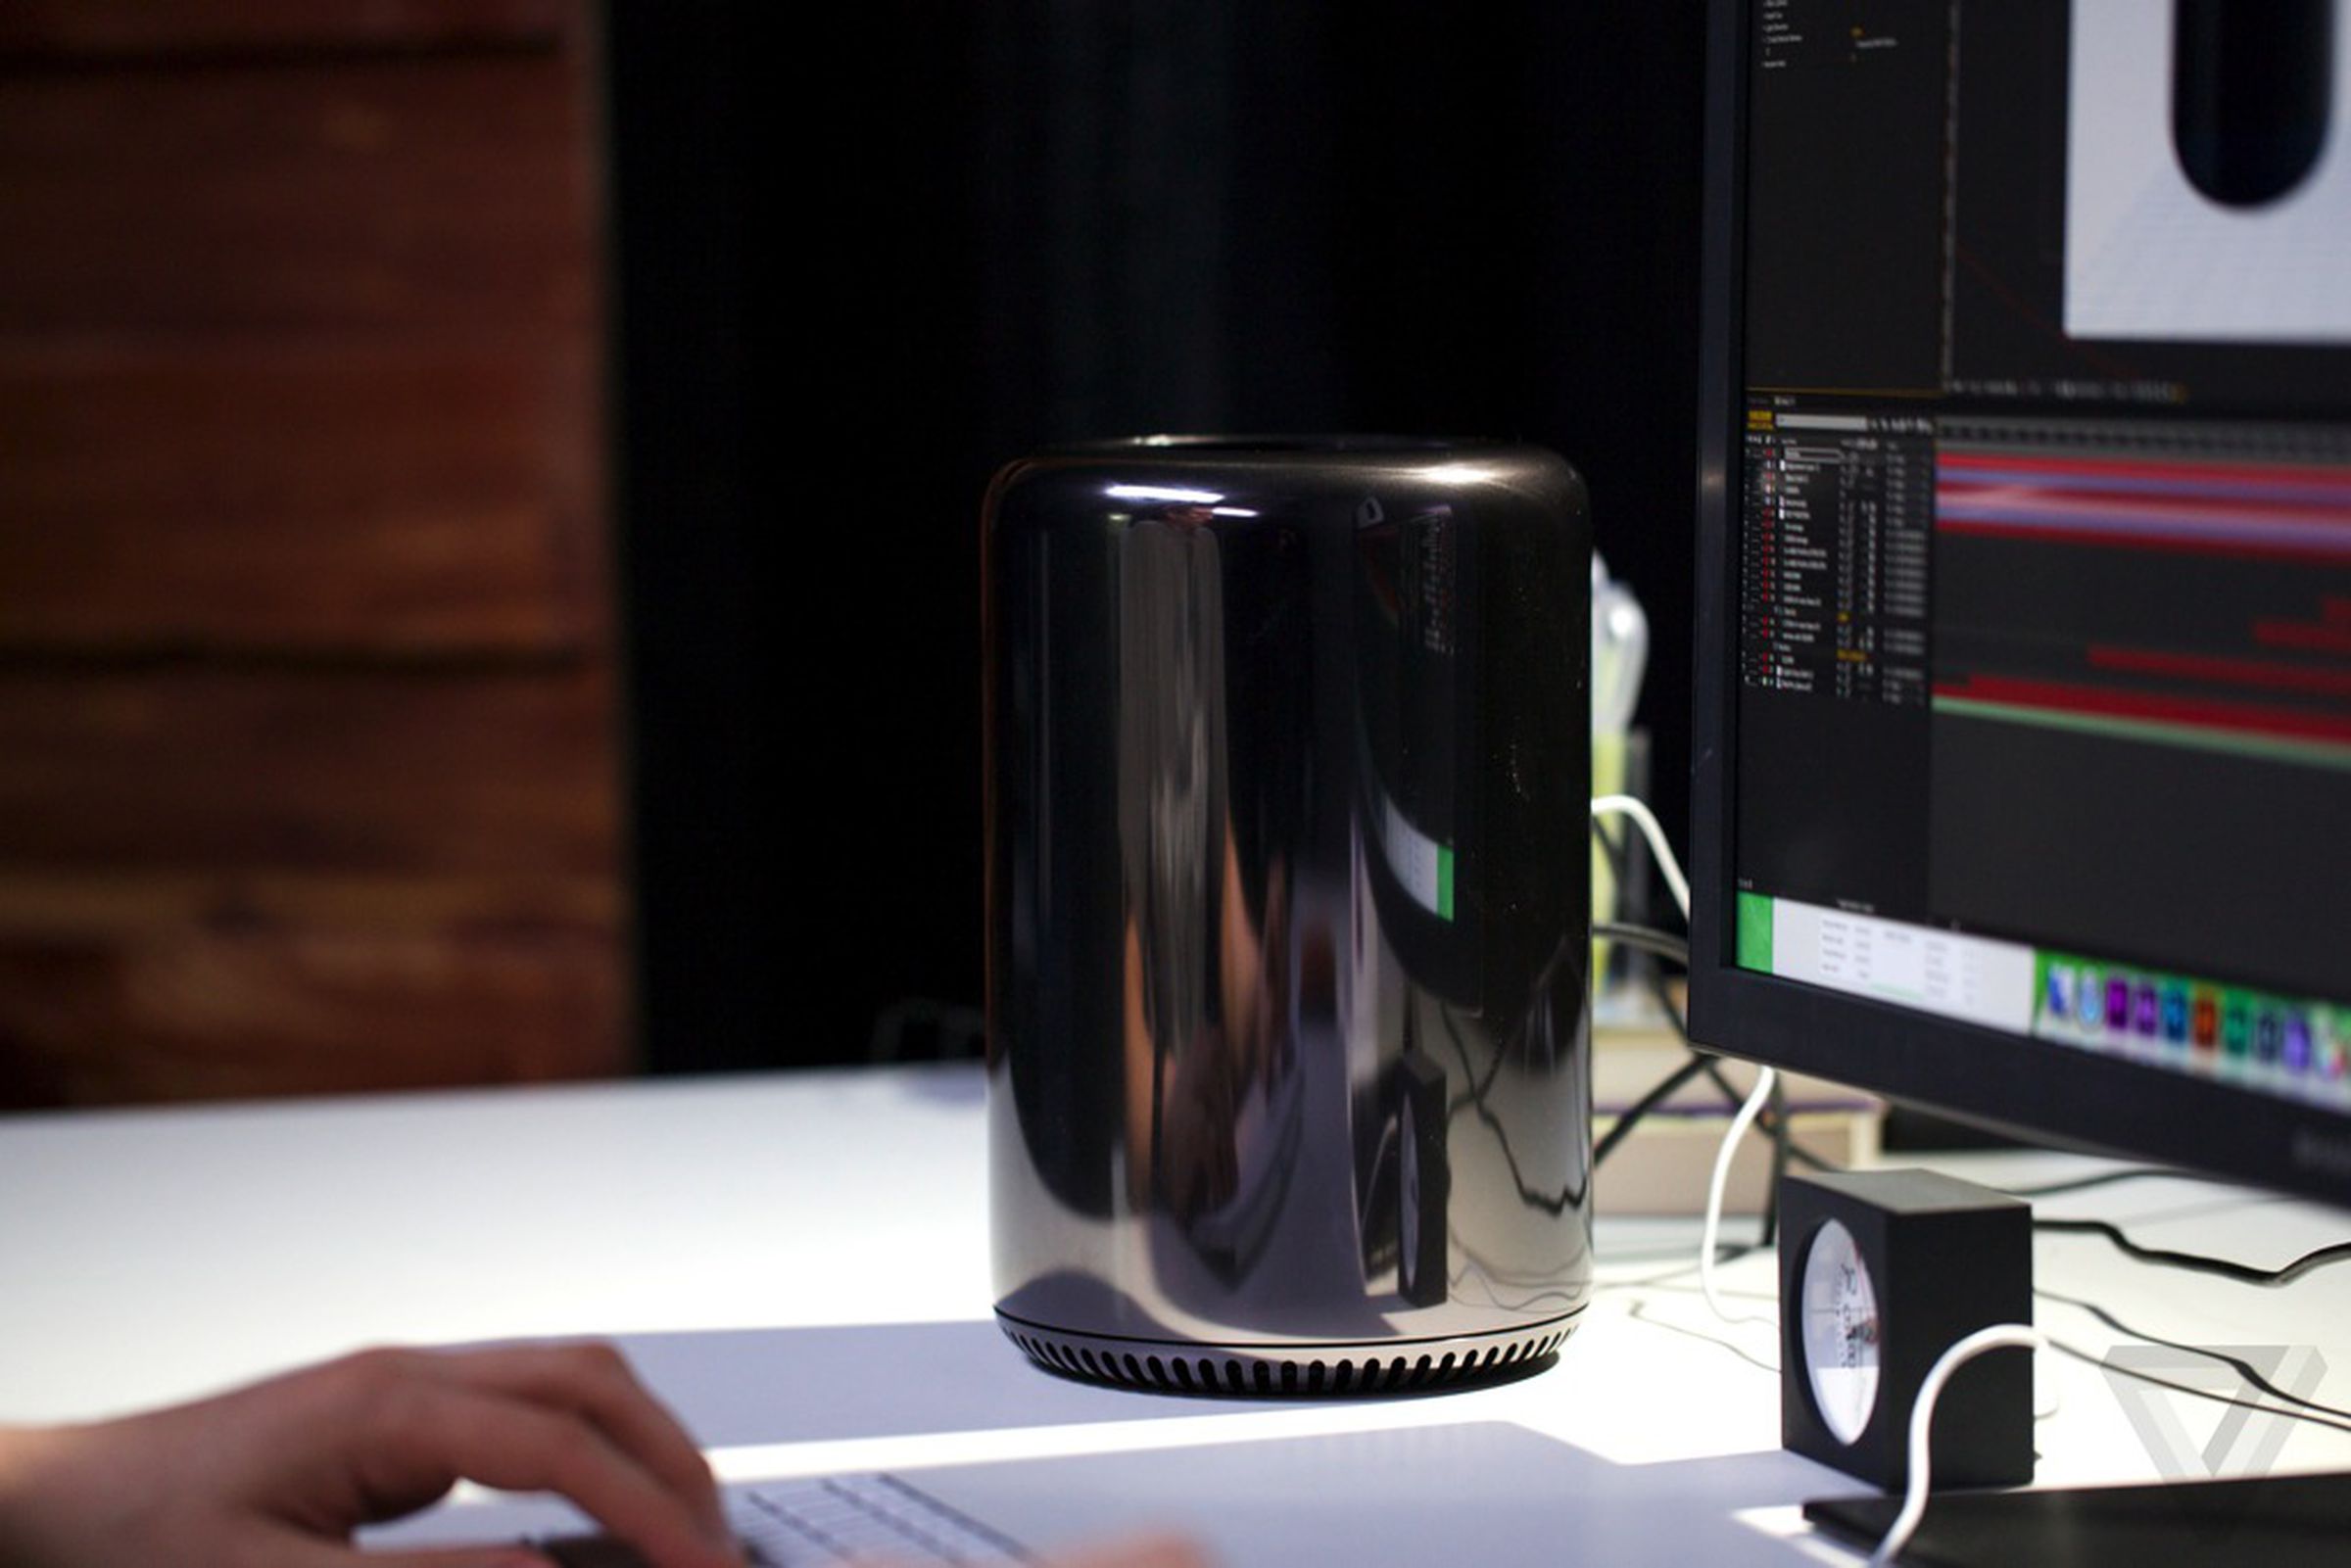 2013-era Mac Pro sitting on a desk.